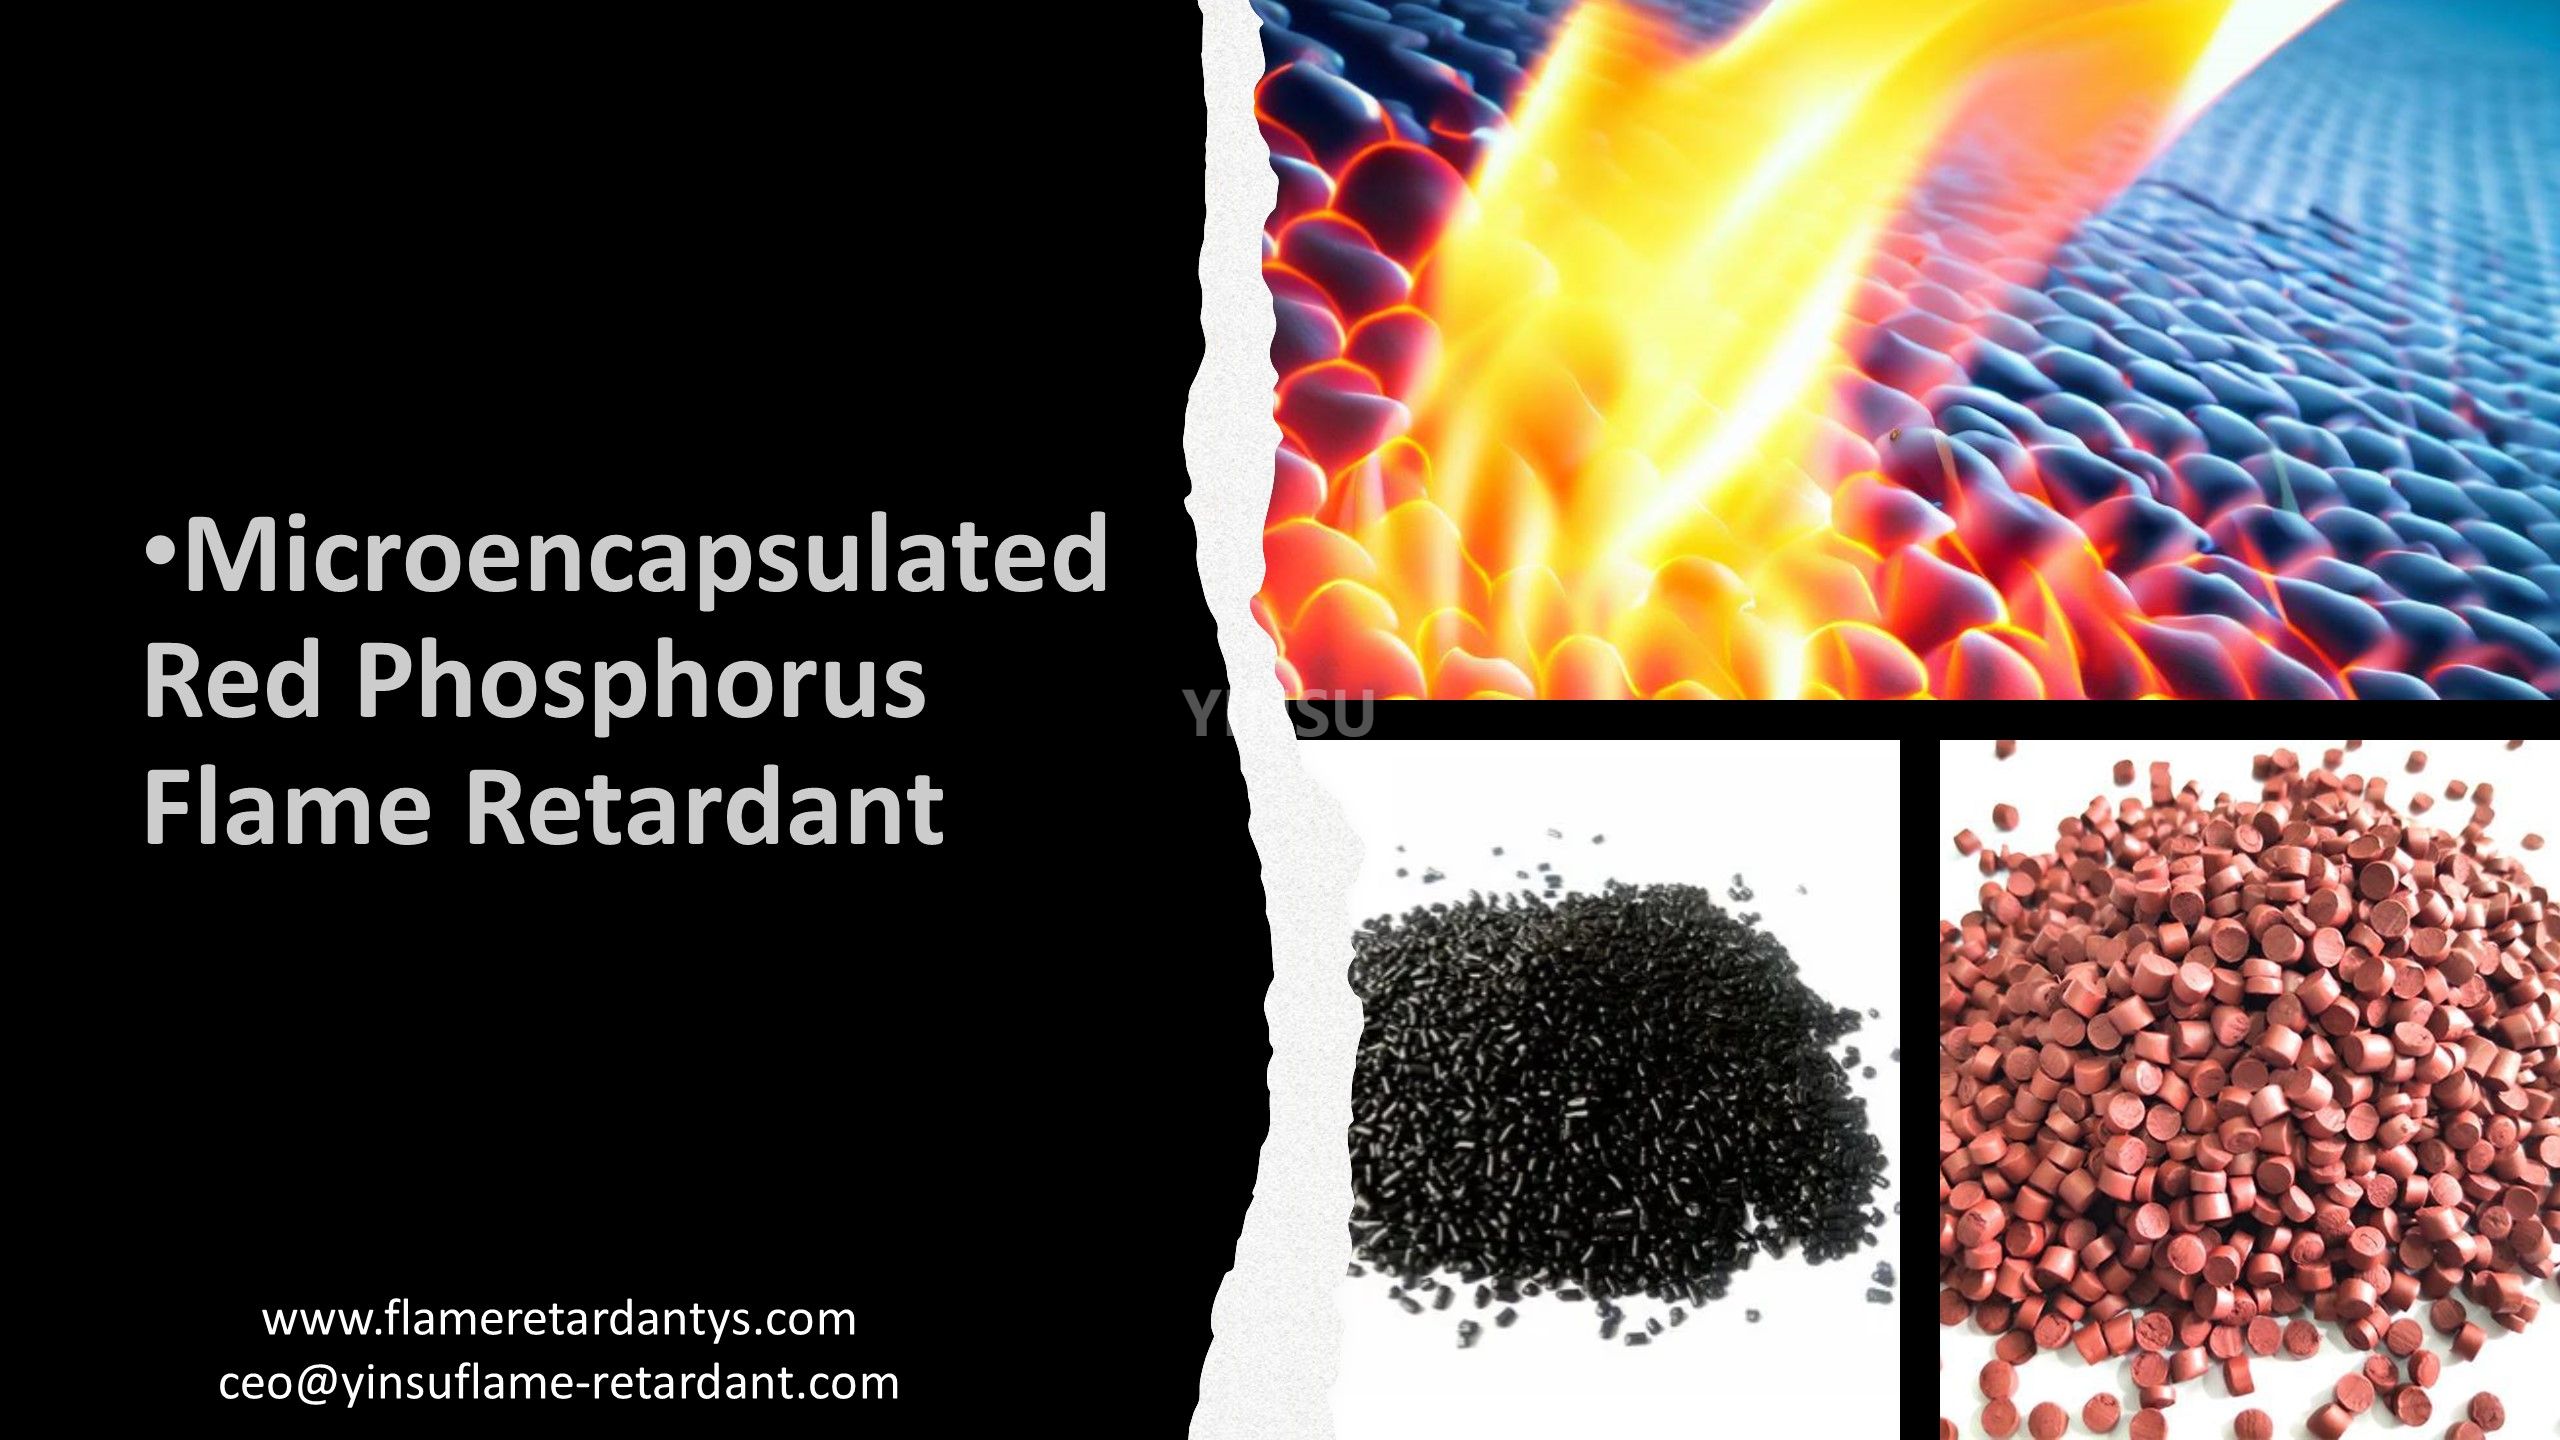 Microencapsulated Red Phosphorus Flame Retardant